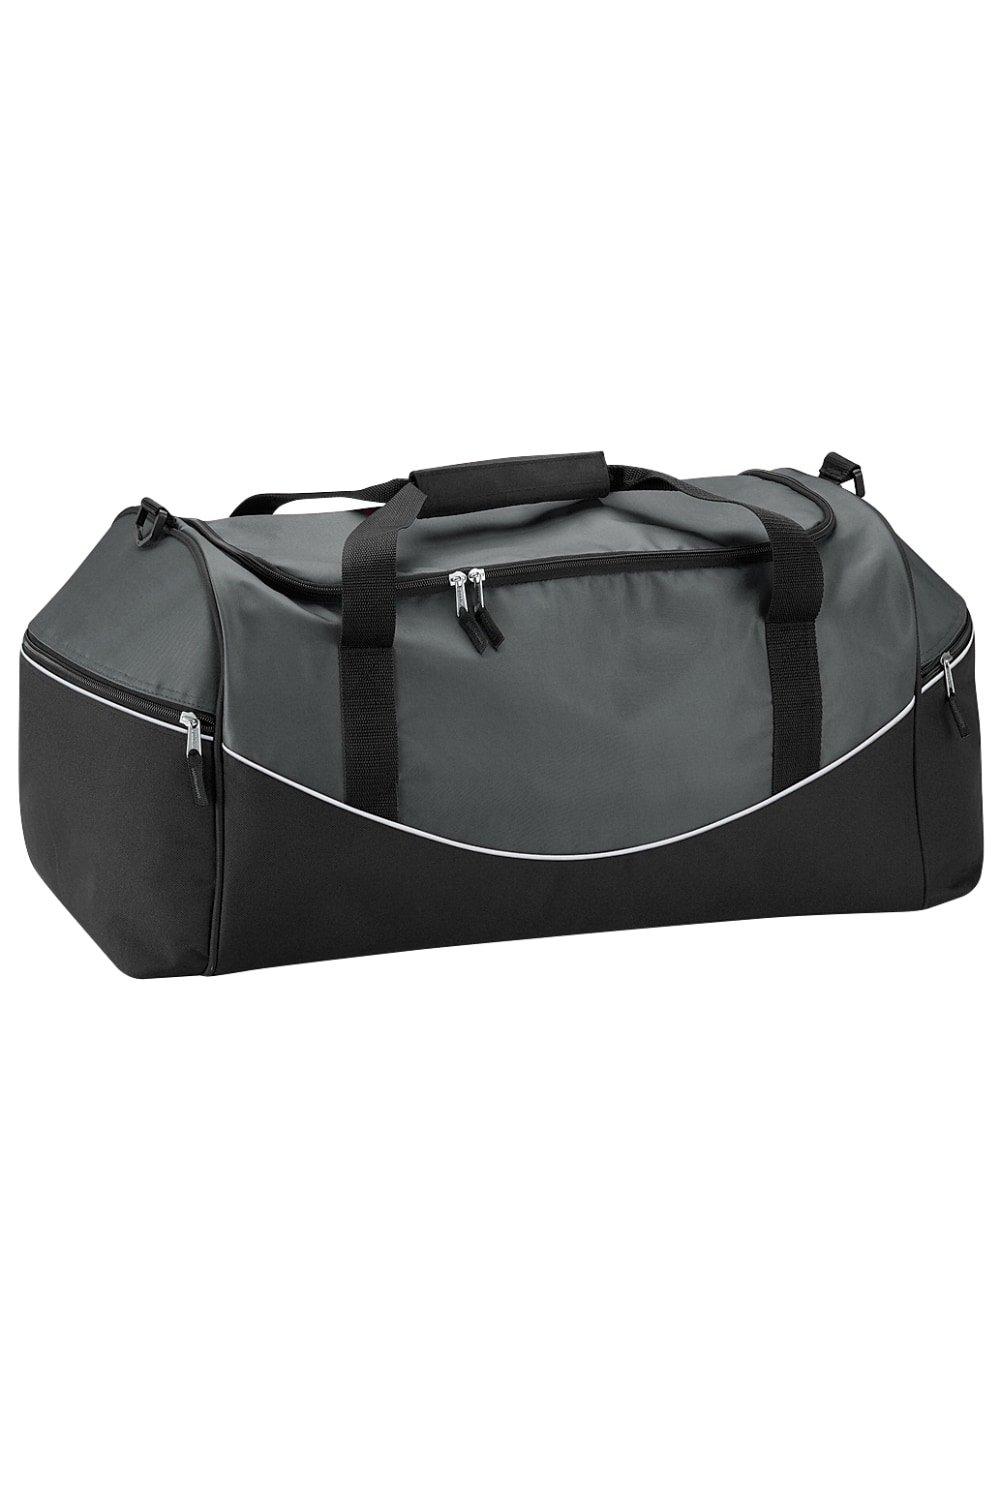 Bags And Wallets Teamwear Holdall Duffle Bag 55 Litres Quadra 